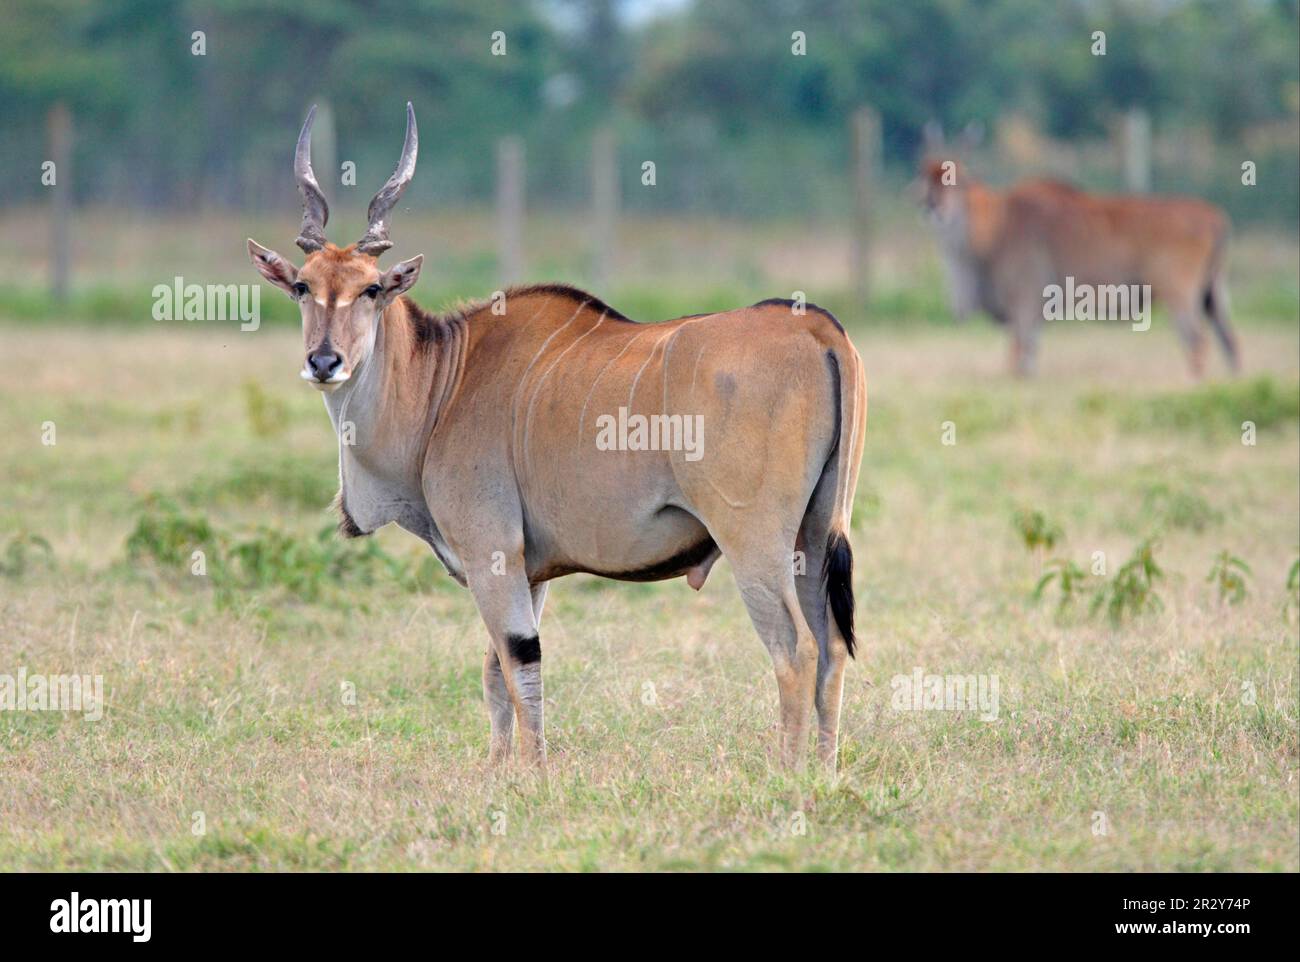 Eland antelope, eland, eland antelopes, antelopes, ungulates, even-toed ungulates, mammals, animals, East African eland (Taurotragus oryx Stock Photo